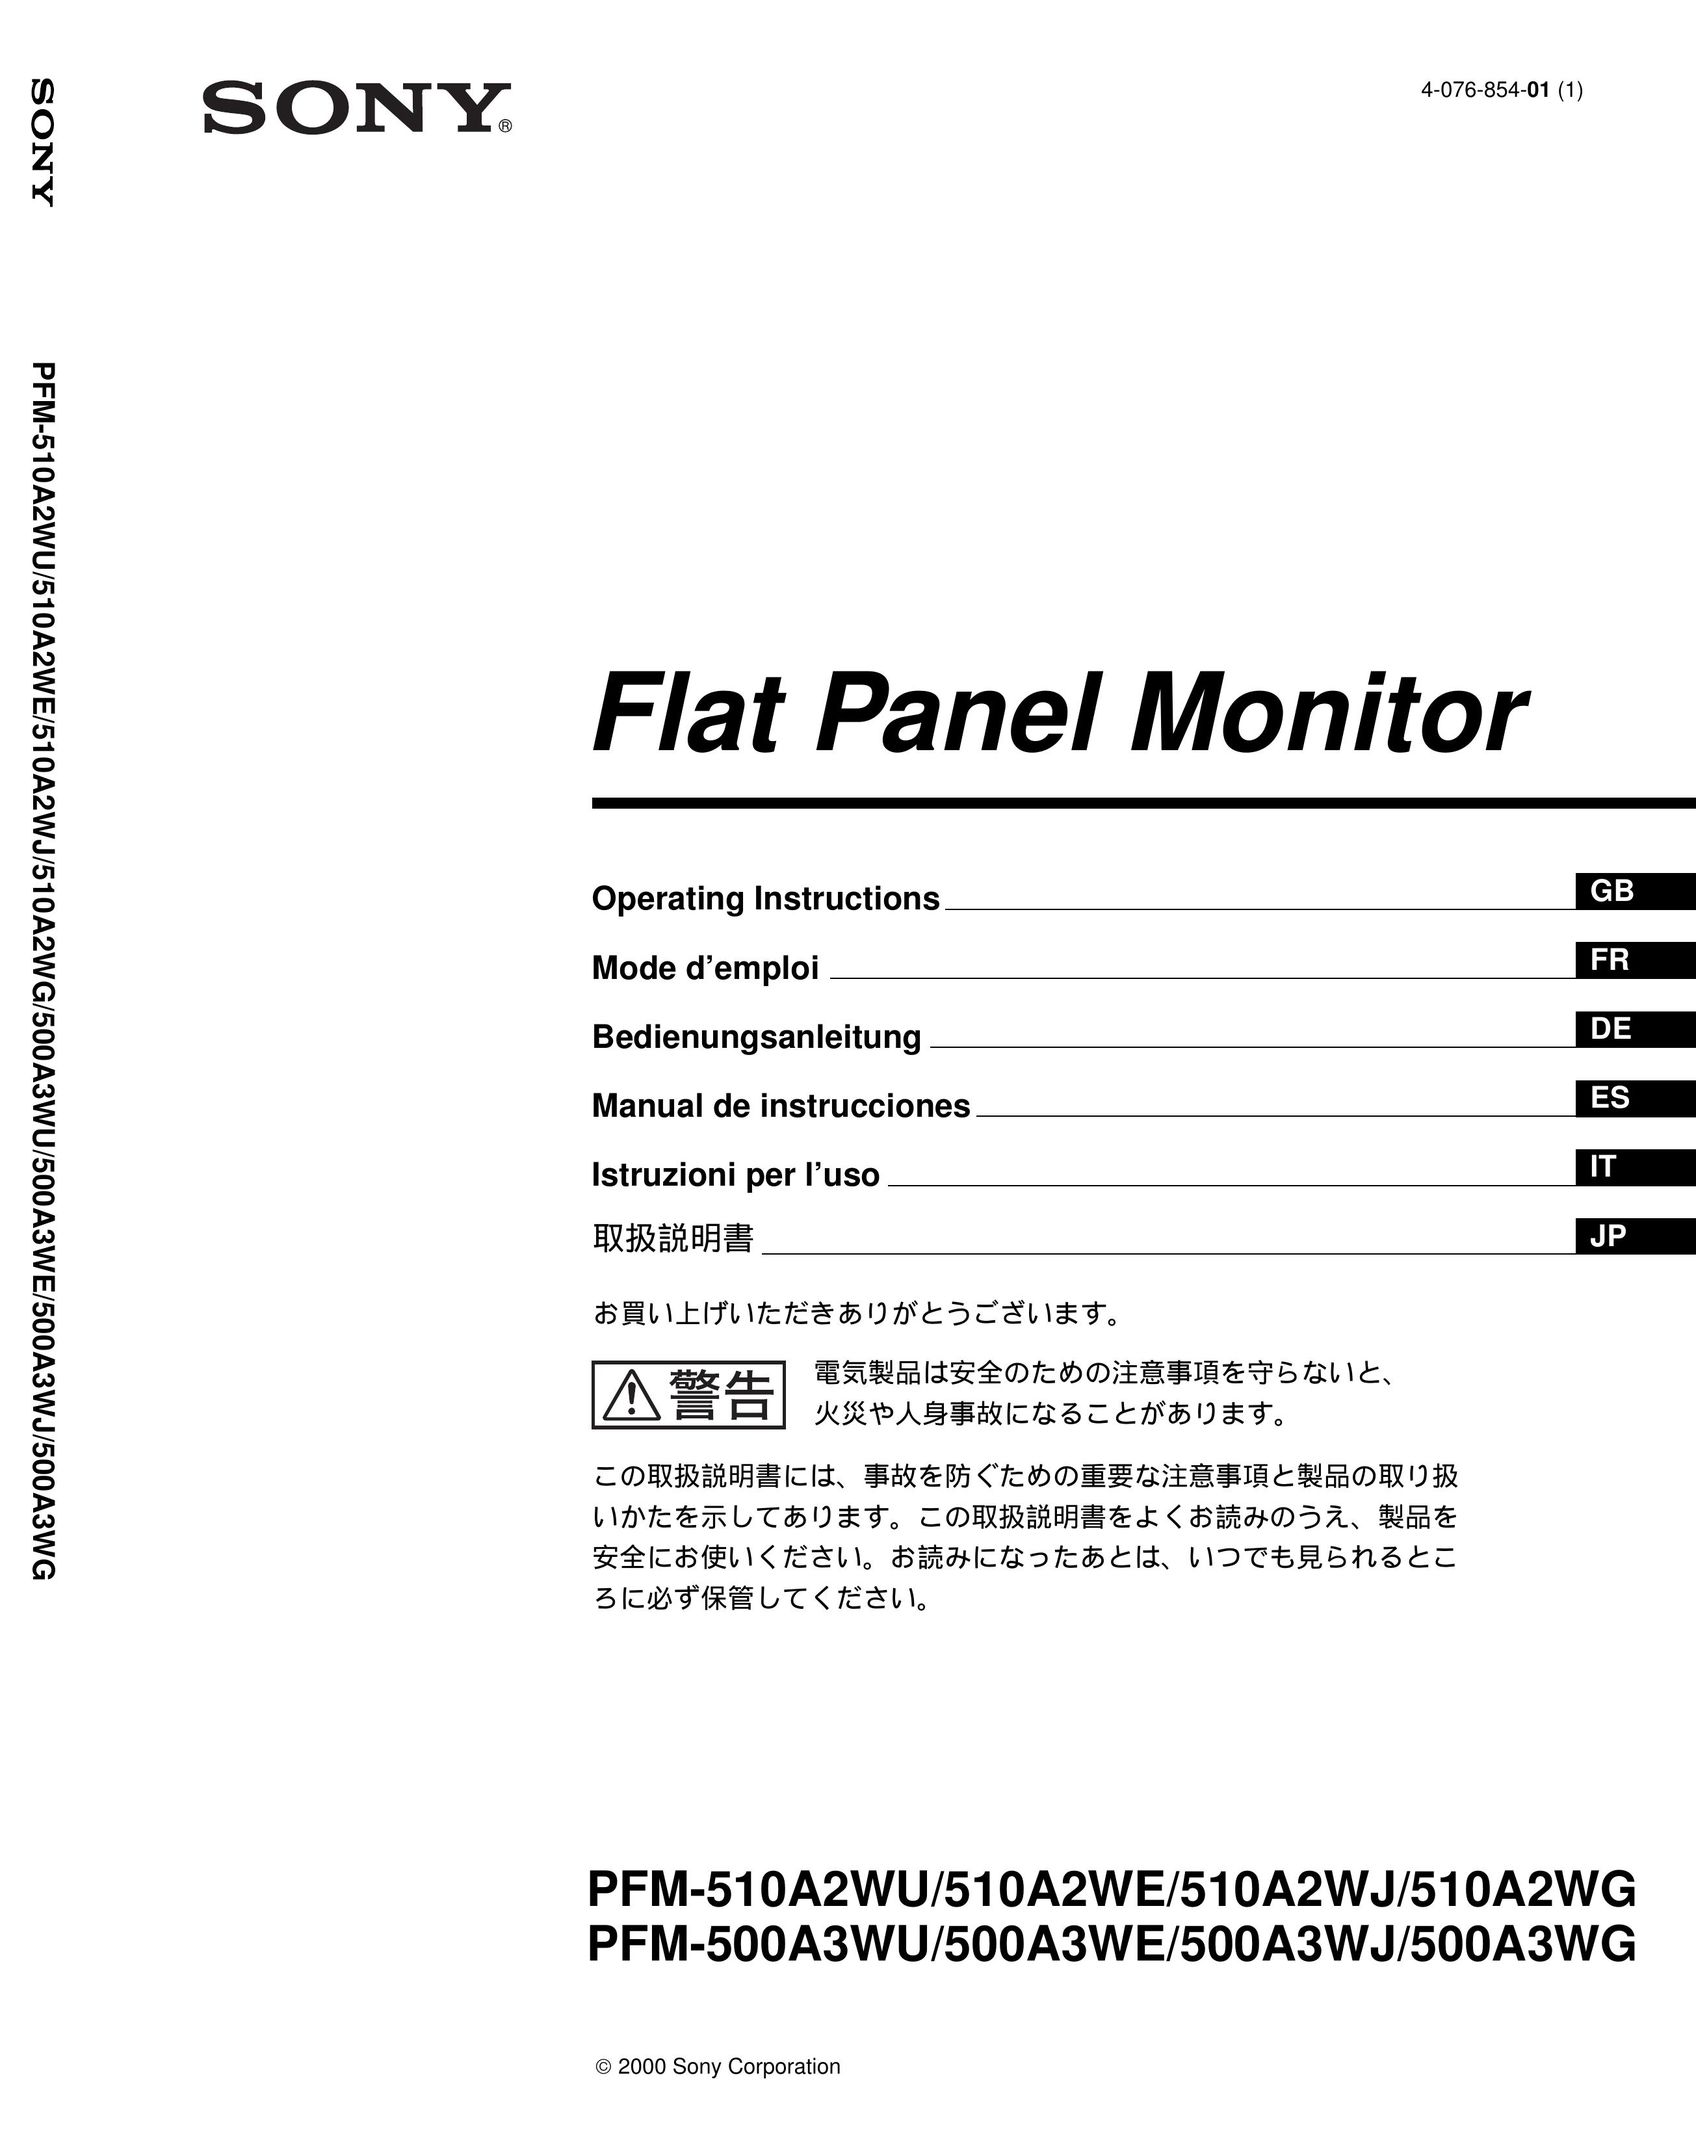 Sony 500A3WJ Computer Monitor User Manual